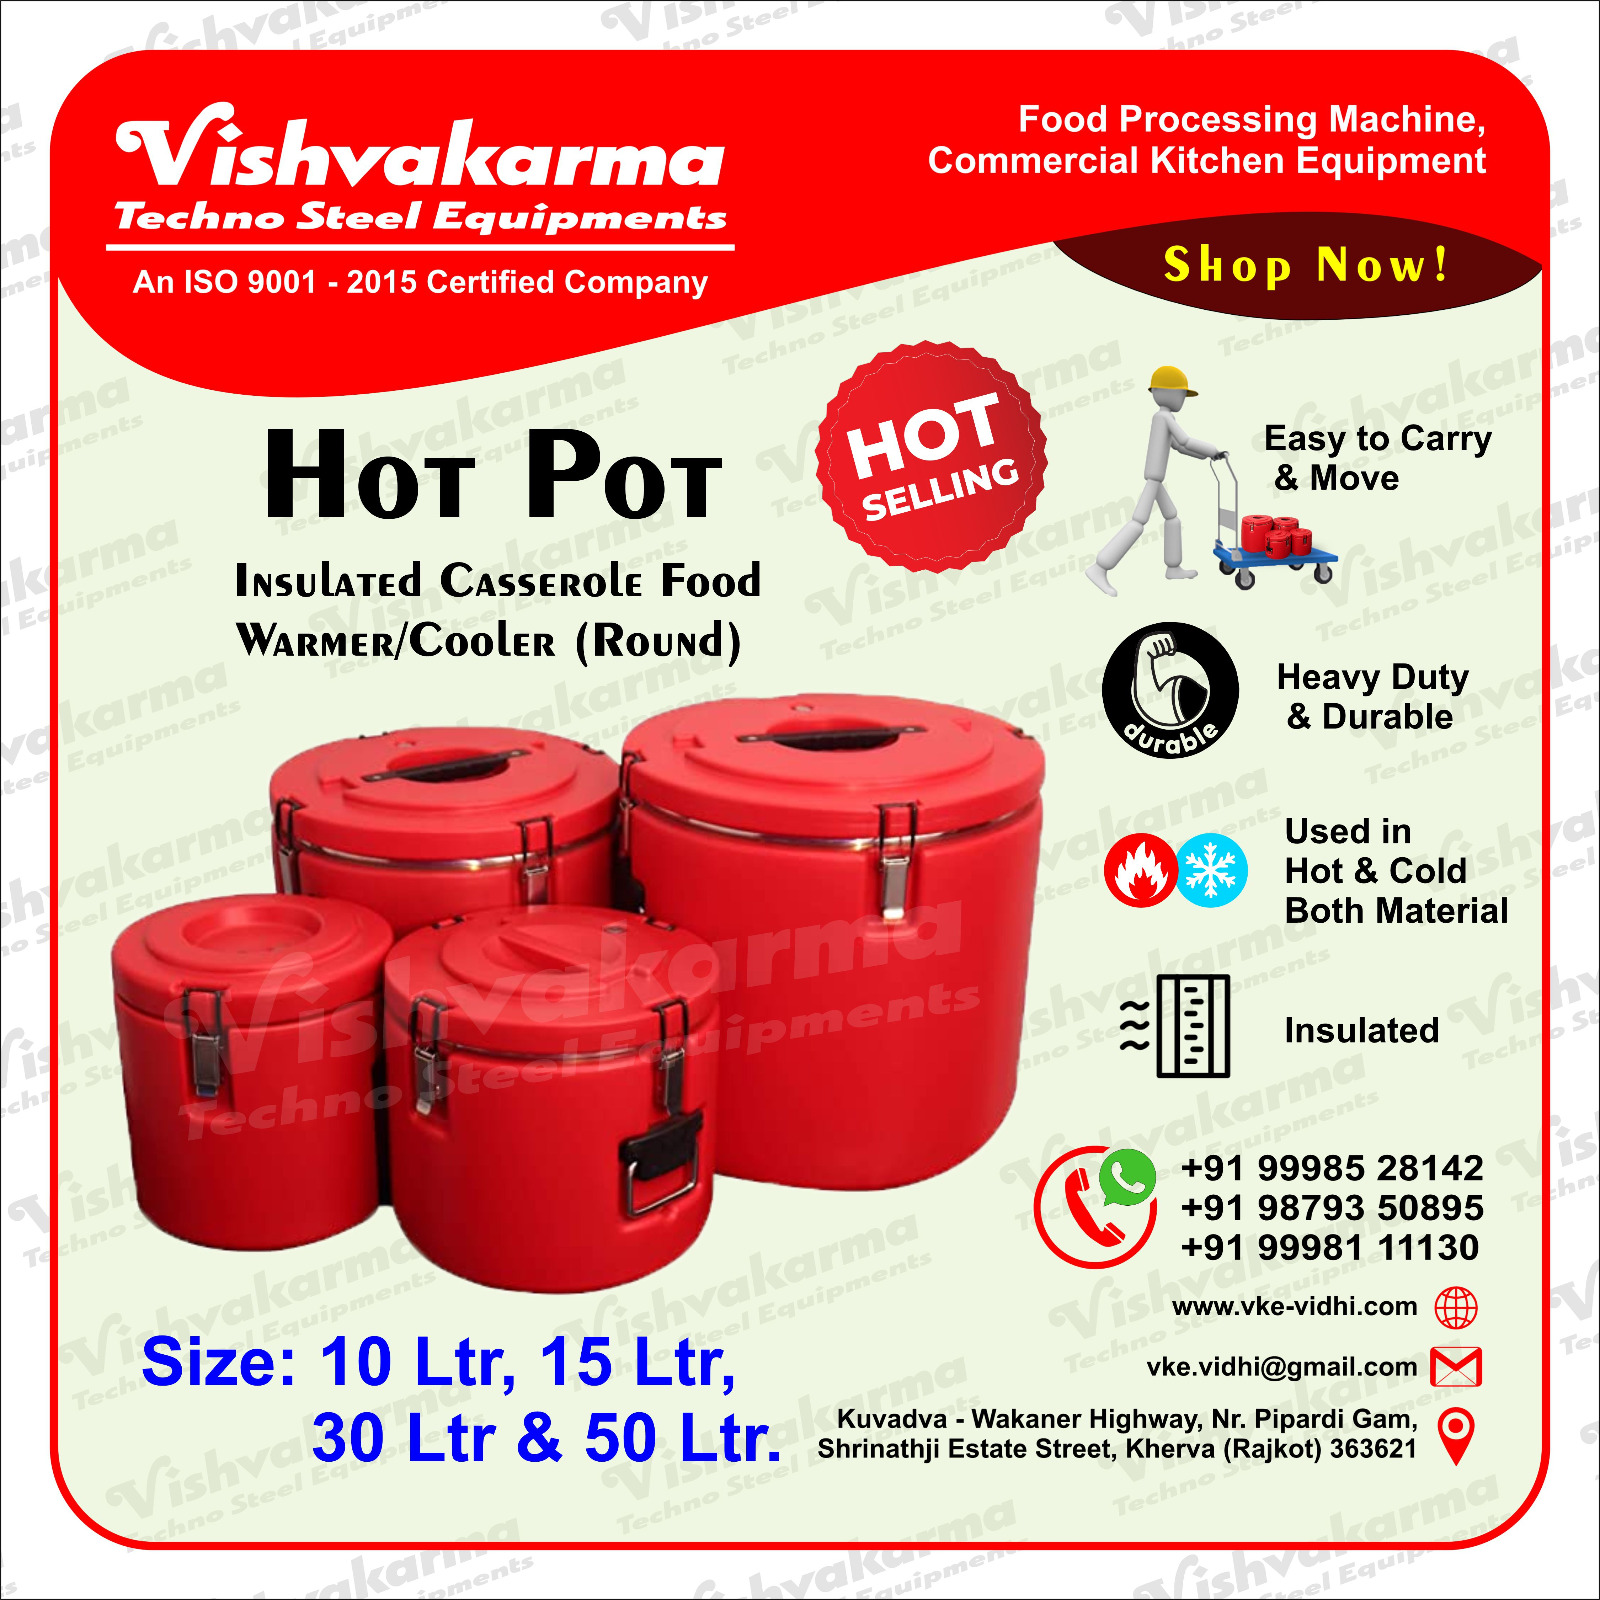 hot-pot insulated casserole food warmer/cooler – Vishvakarma Techno Steel  Equipments- Best commercial kitchen equipments manufacturer in  Rajkot,Vadodara,Surat,Ahmedabad,Junagadh,Bhavnagar,Jamnagar,Gujarat,India, Hotels, Restaurants, Canteens